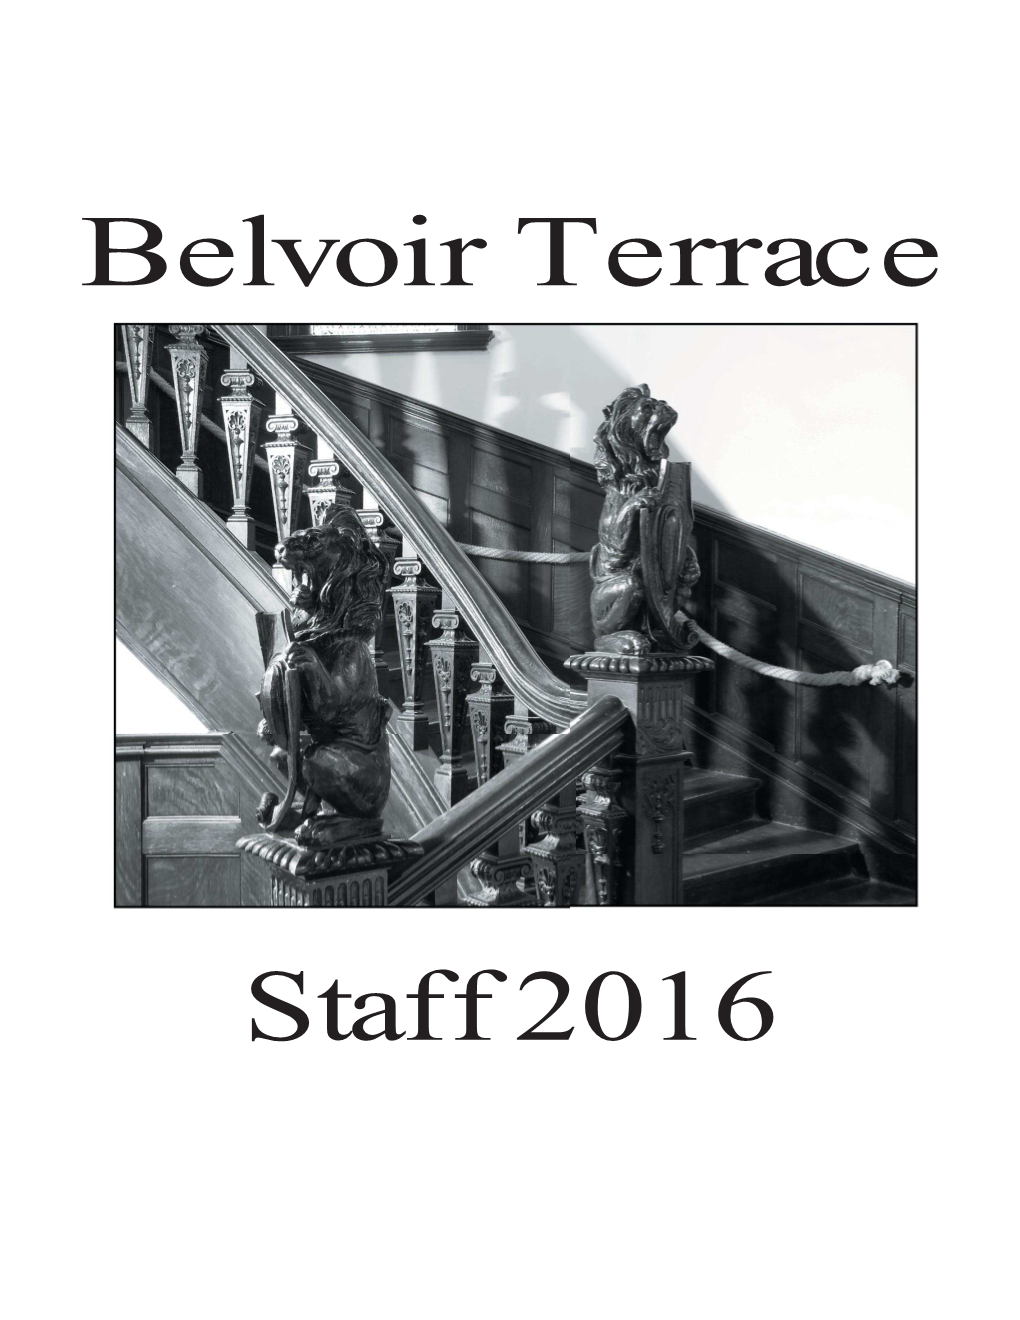 Belvoir Terrace Staff 2016